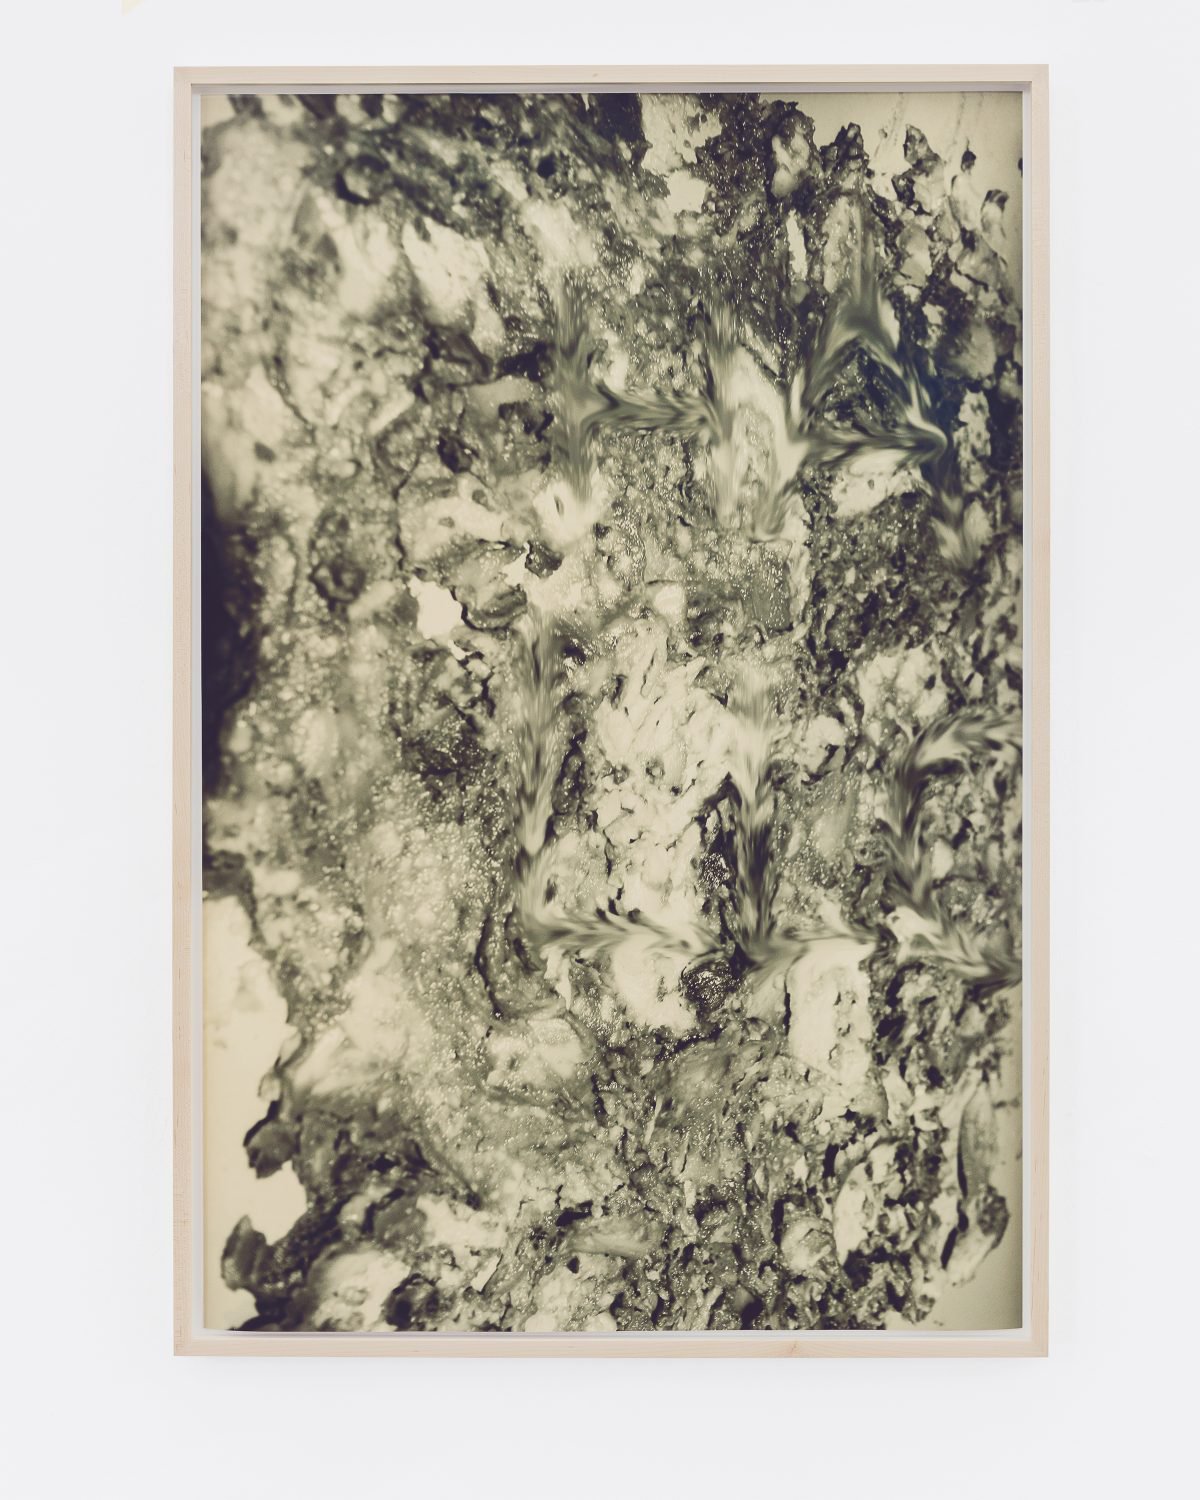 Lisa HolzerGuts, 2019Pigment print on cotton paper110.3 x 74.5 cm